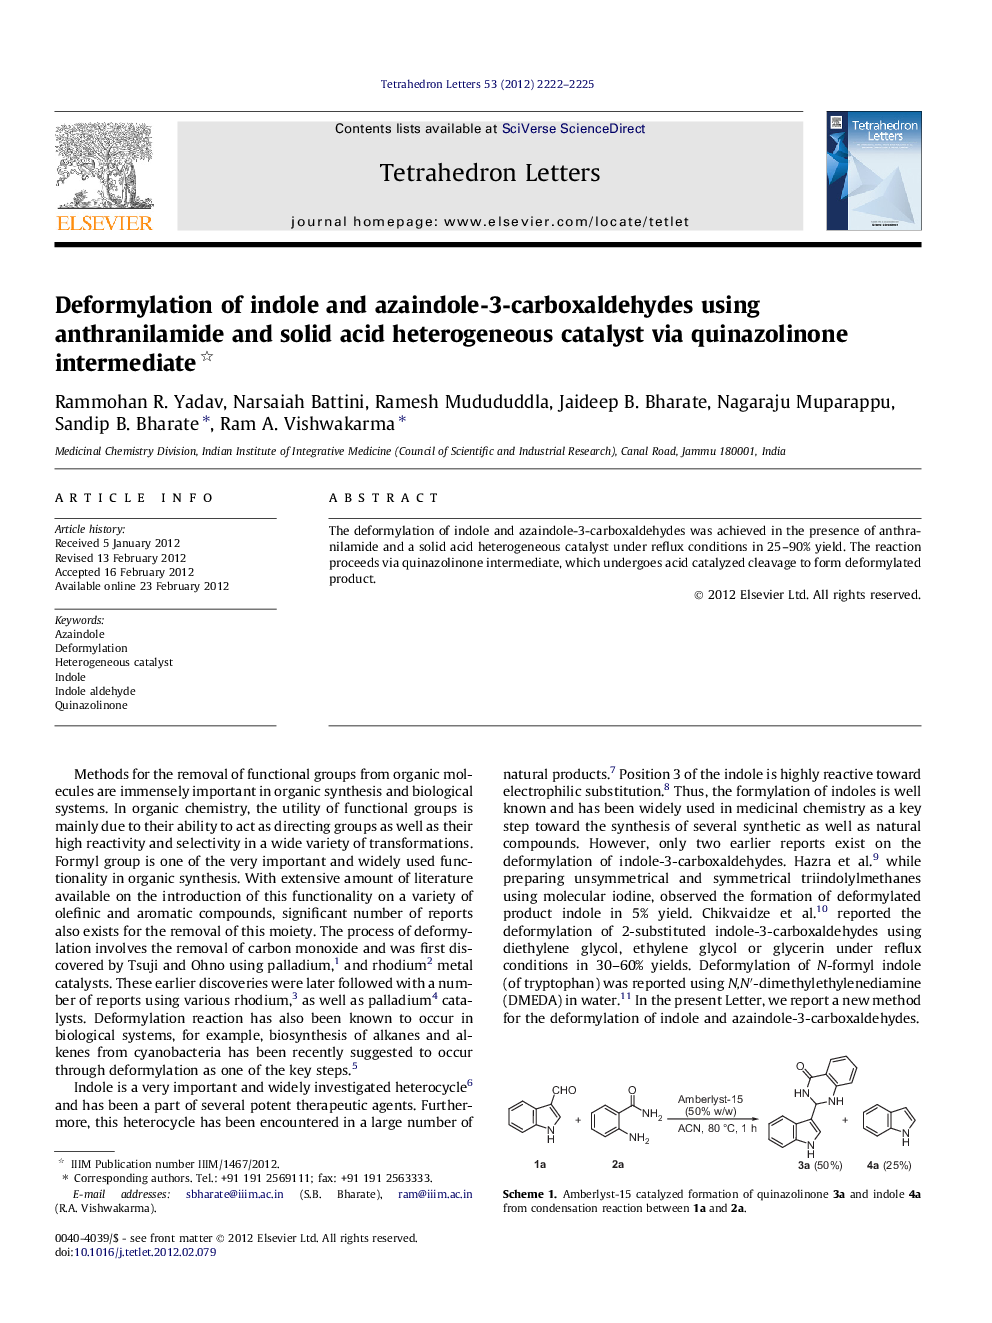 Deformylation of indole and azaindole-3-carboxaldehydes using anthranilamide and solid acid heterogeneous catalyst via quinazolinone intermediate